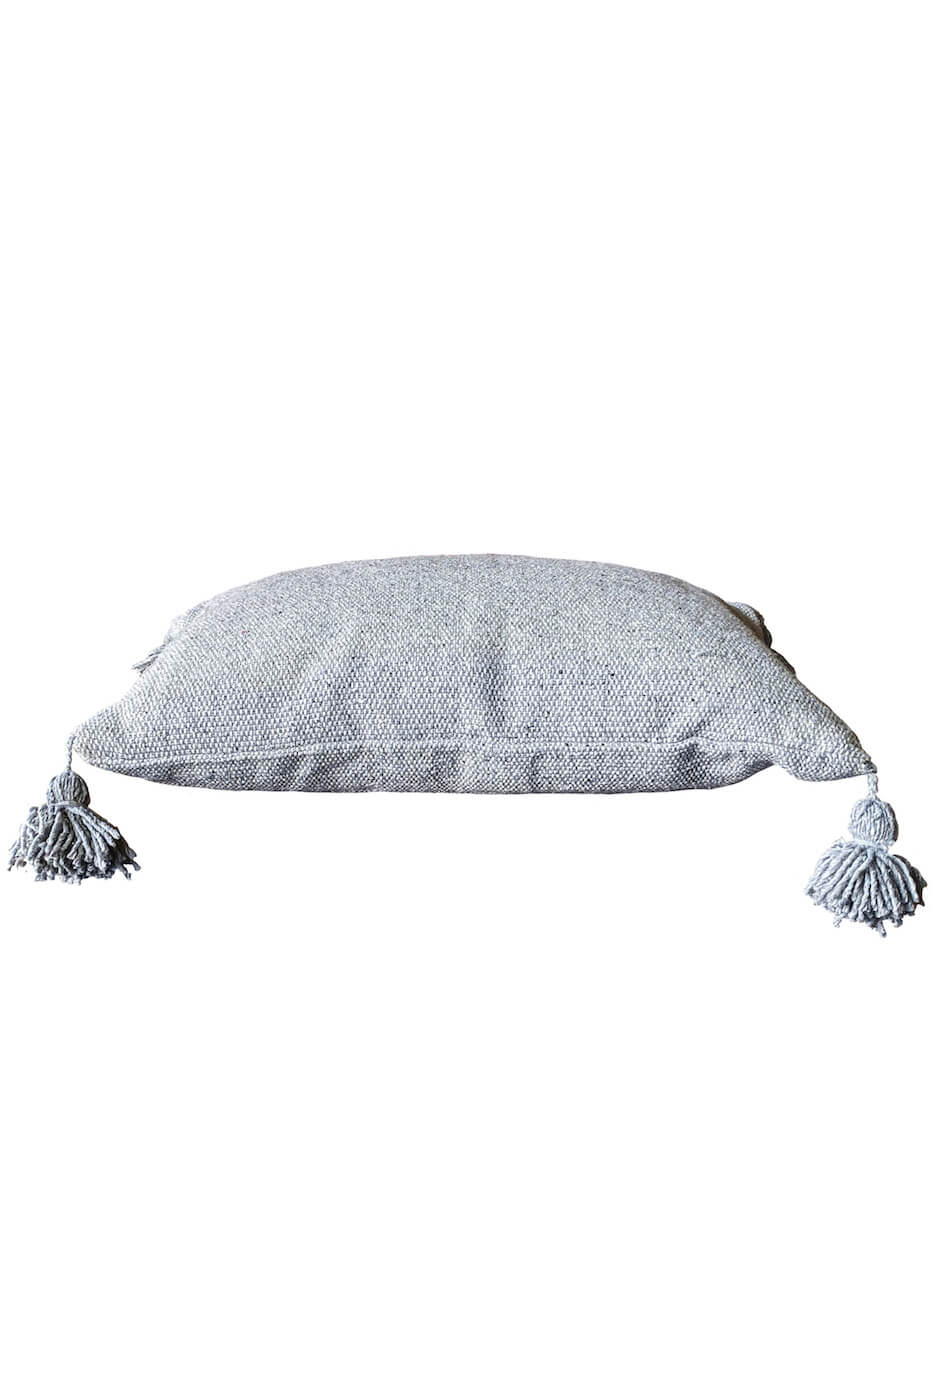 Moroccan Pillow - Grey